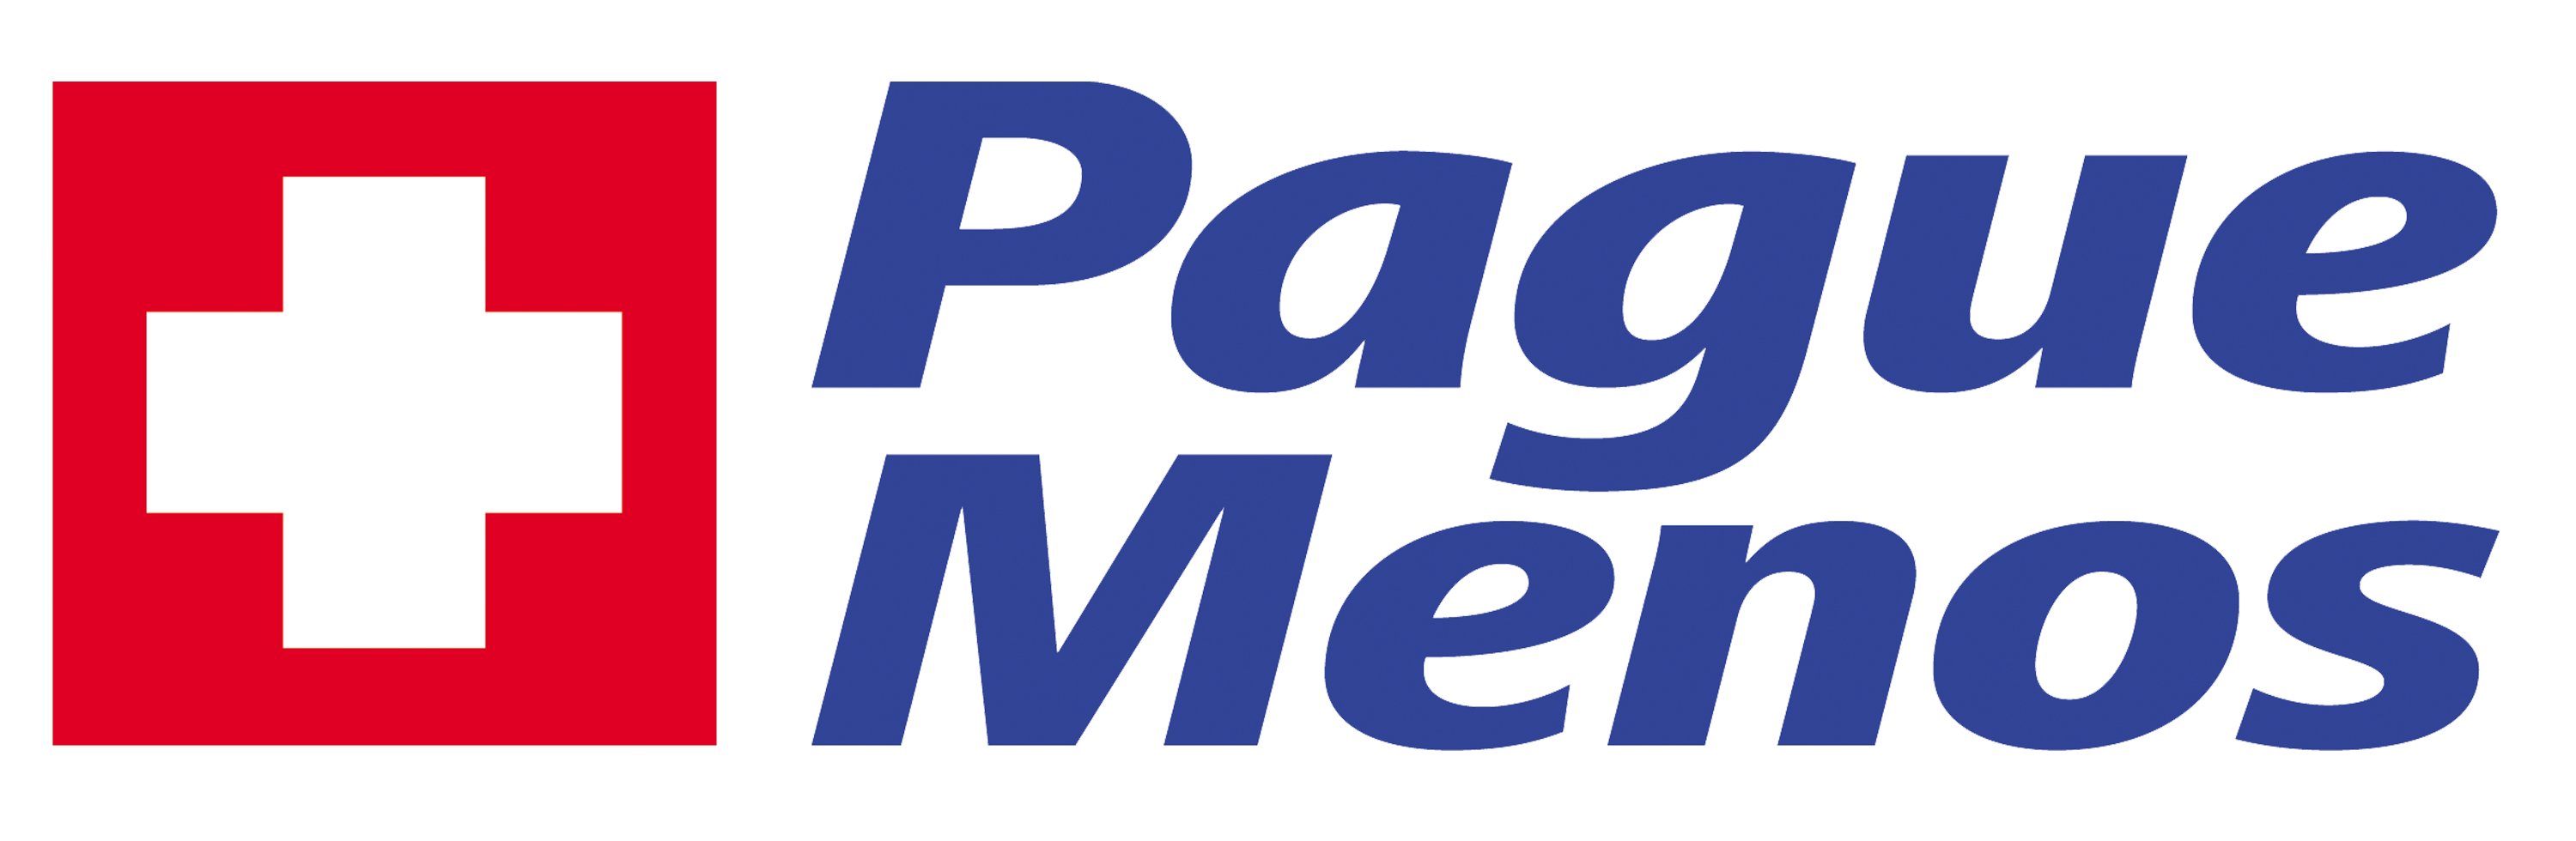 Farmacia Pague Menos-Ilheus BA